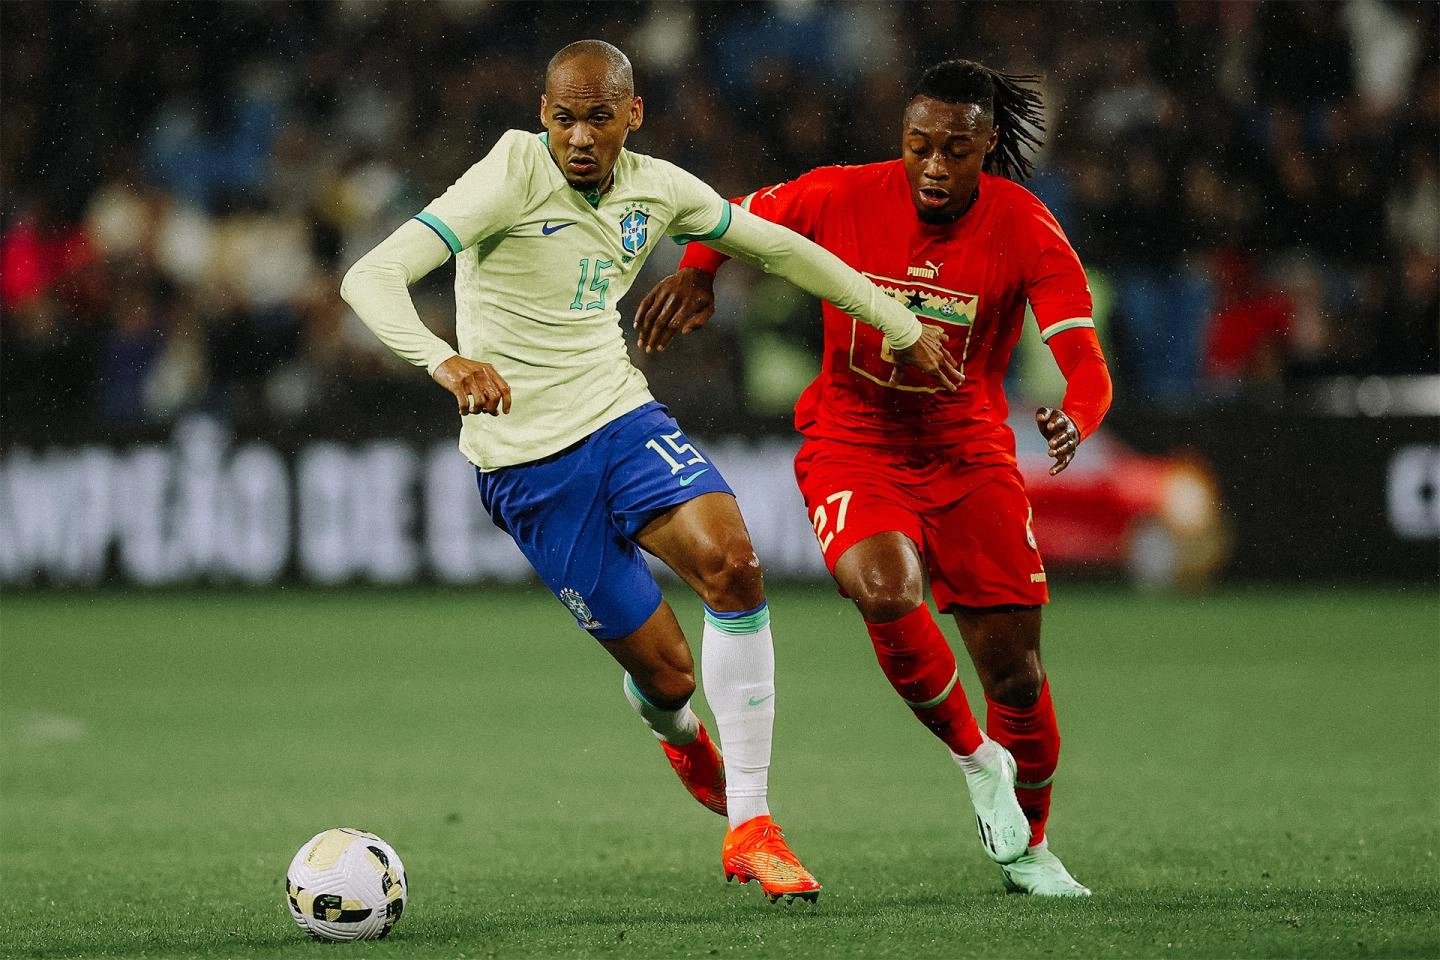 Liverpool's Fabinho is part of Brazil's squad in Qatar